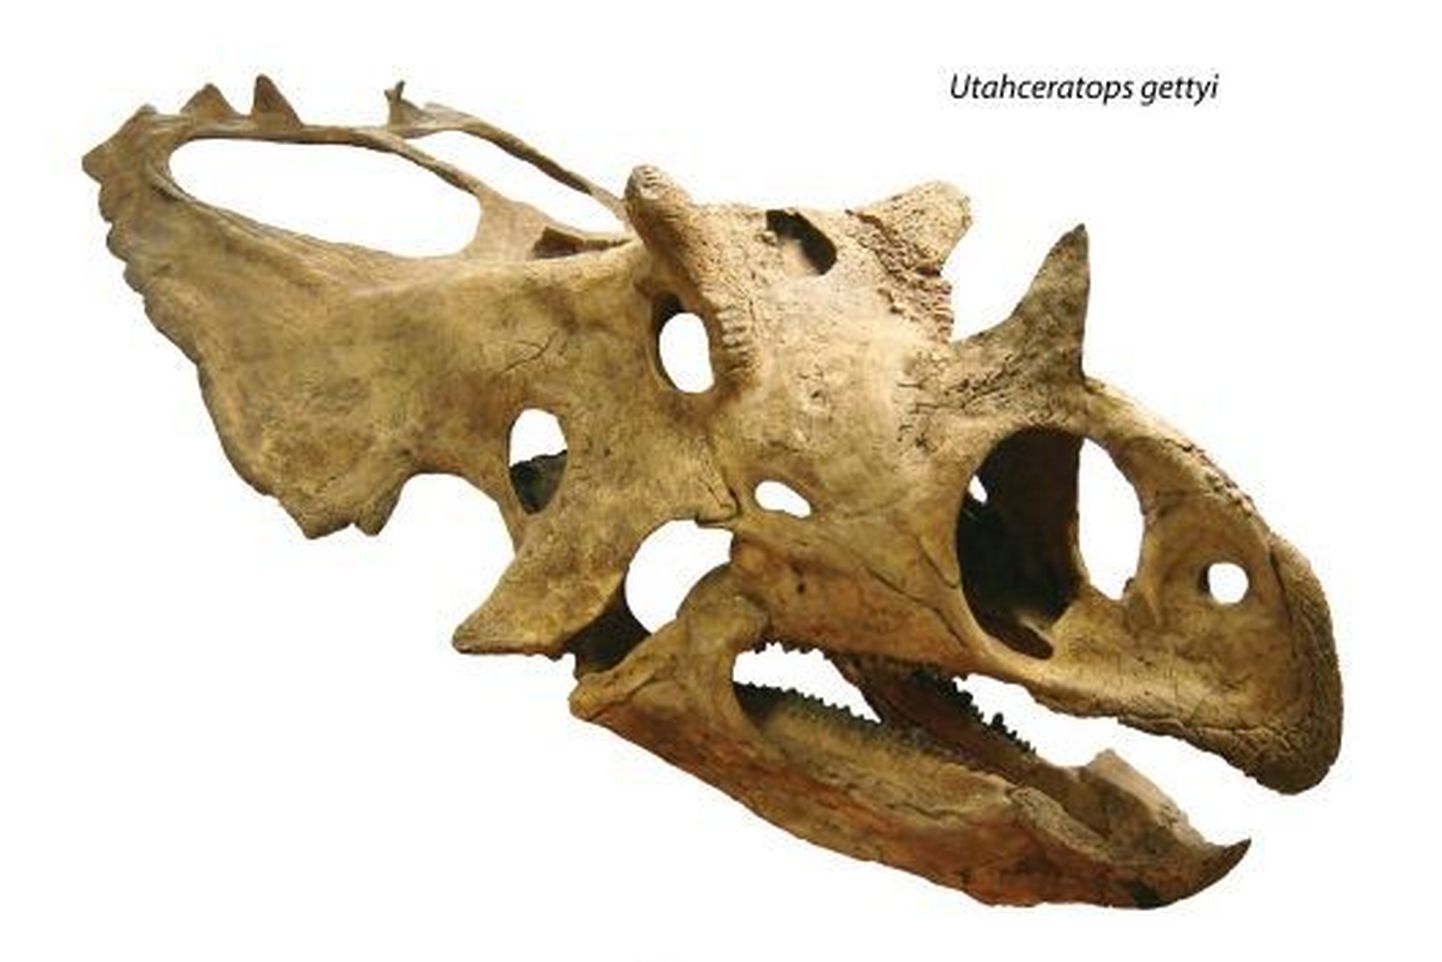 Utahceratops gettyi